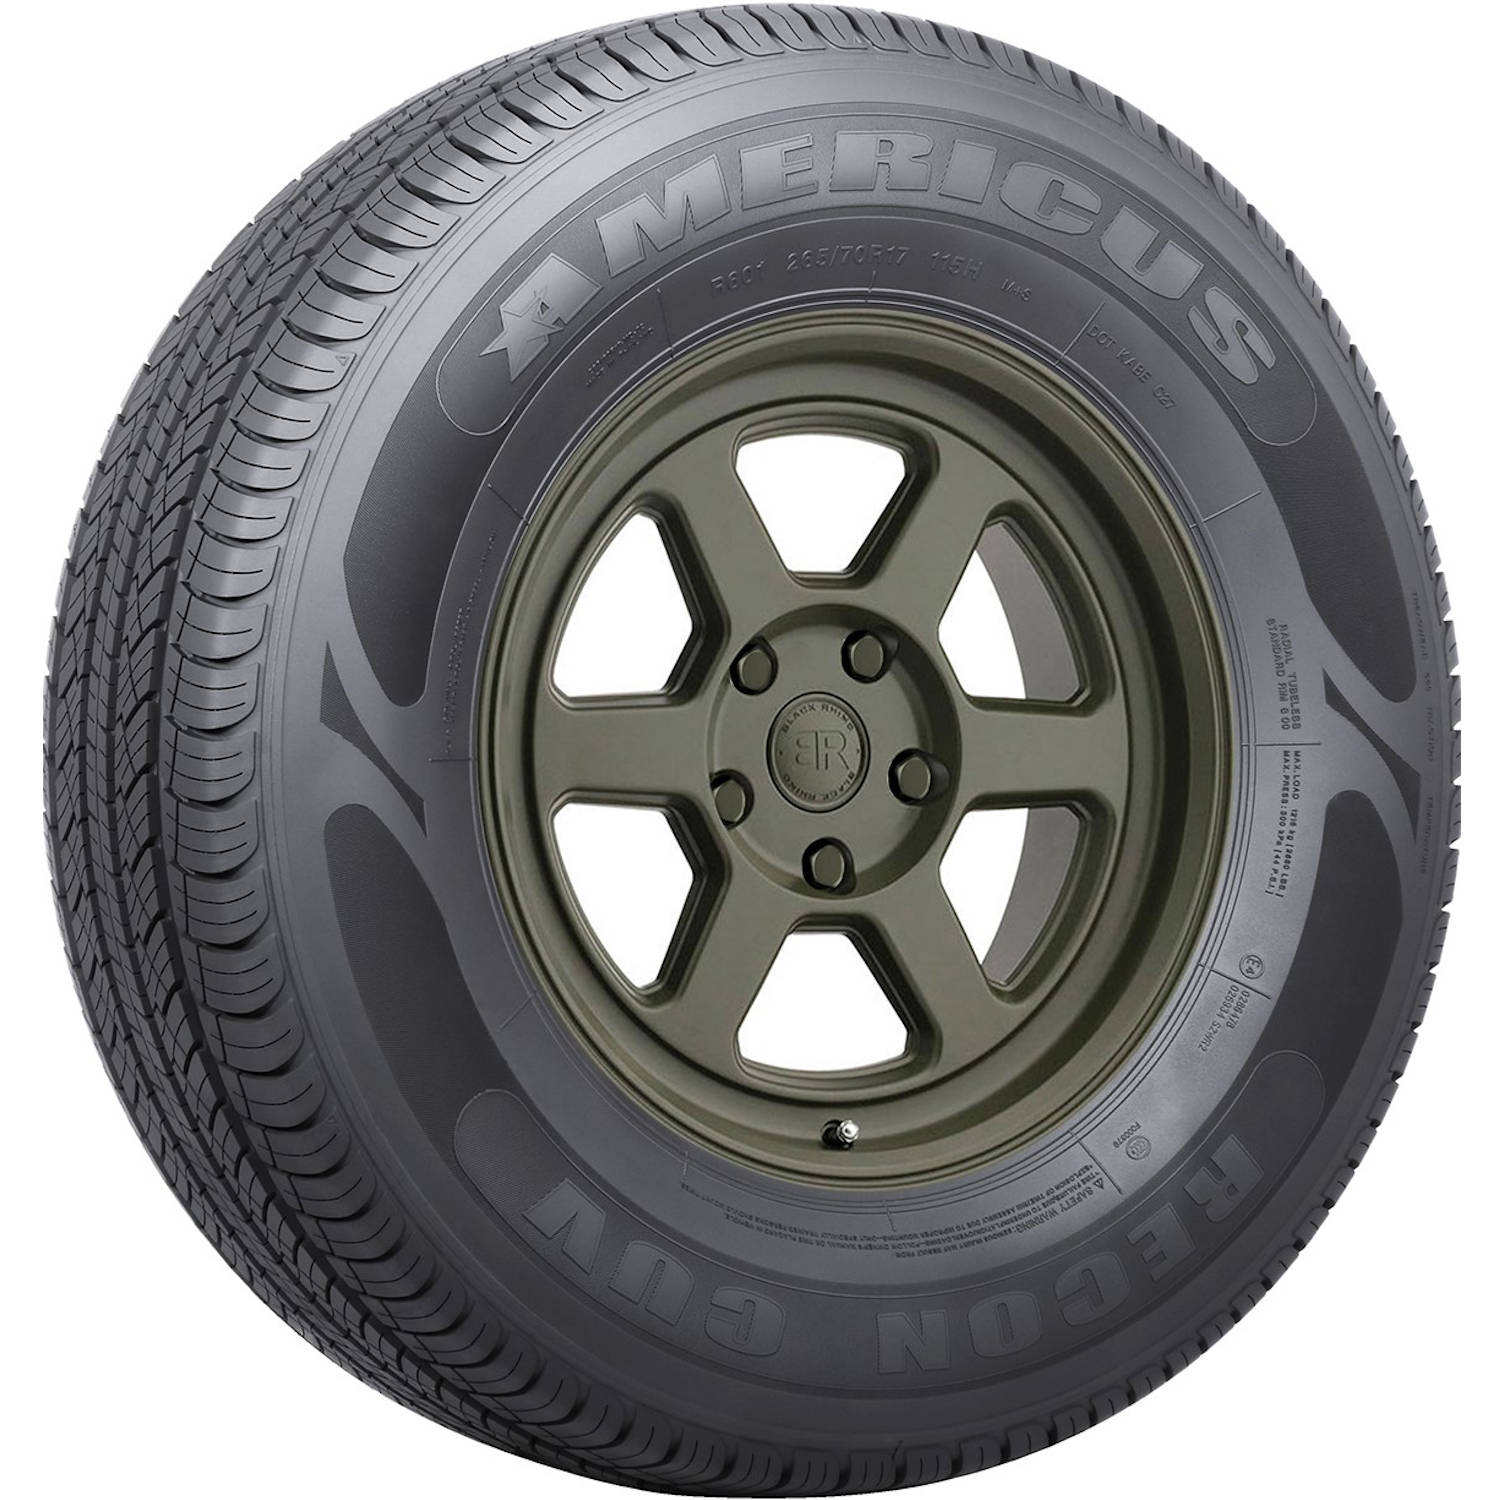 AMERICUS RECON CUV 225/75R16 XL (29.3X8.9R 16) Tires